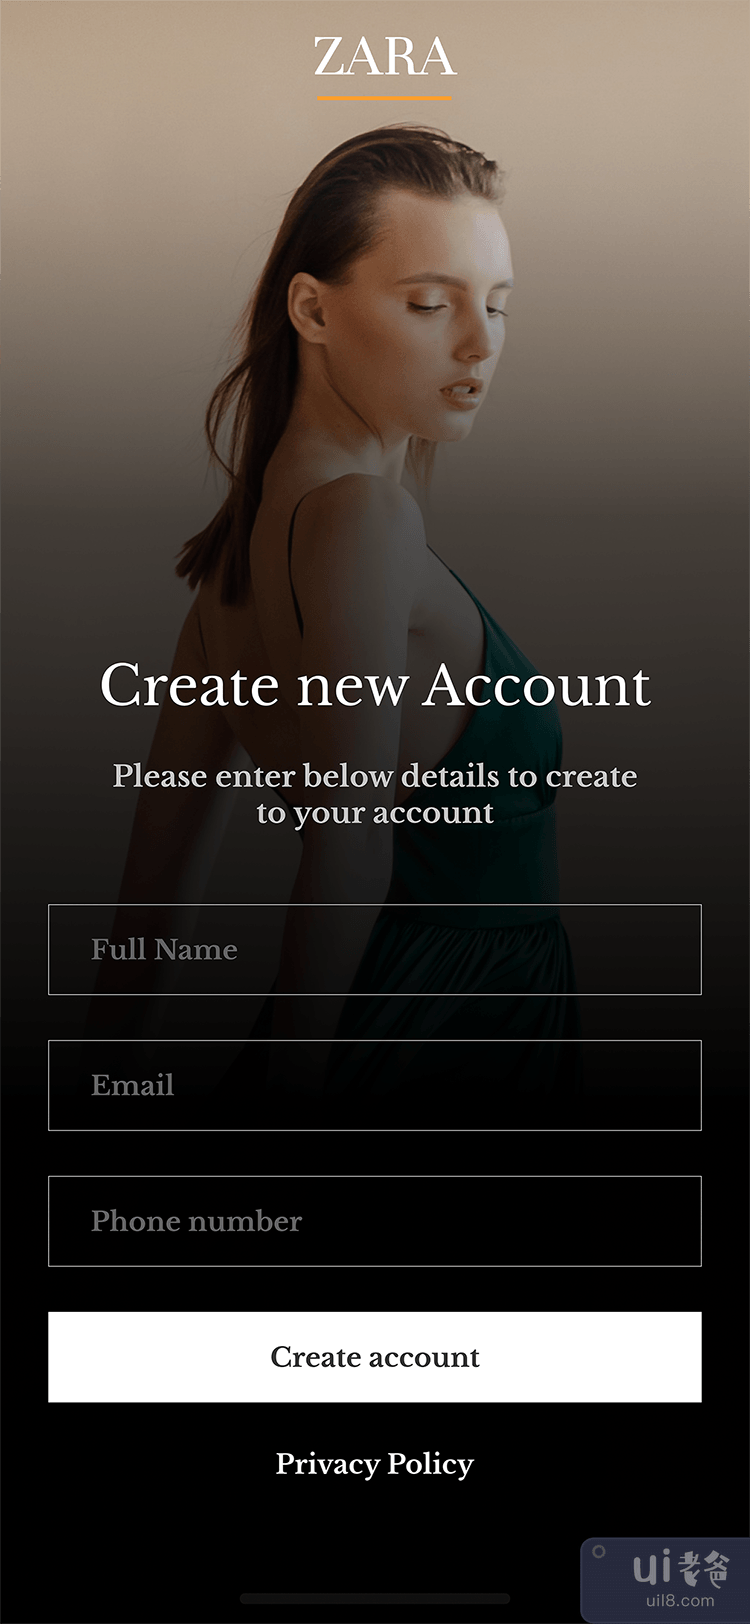 Zara 时尚 - iOS 应用(Zara fashion - iOS App)插图4